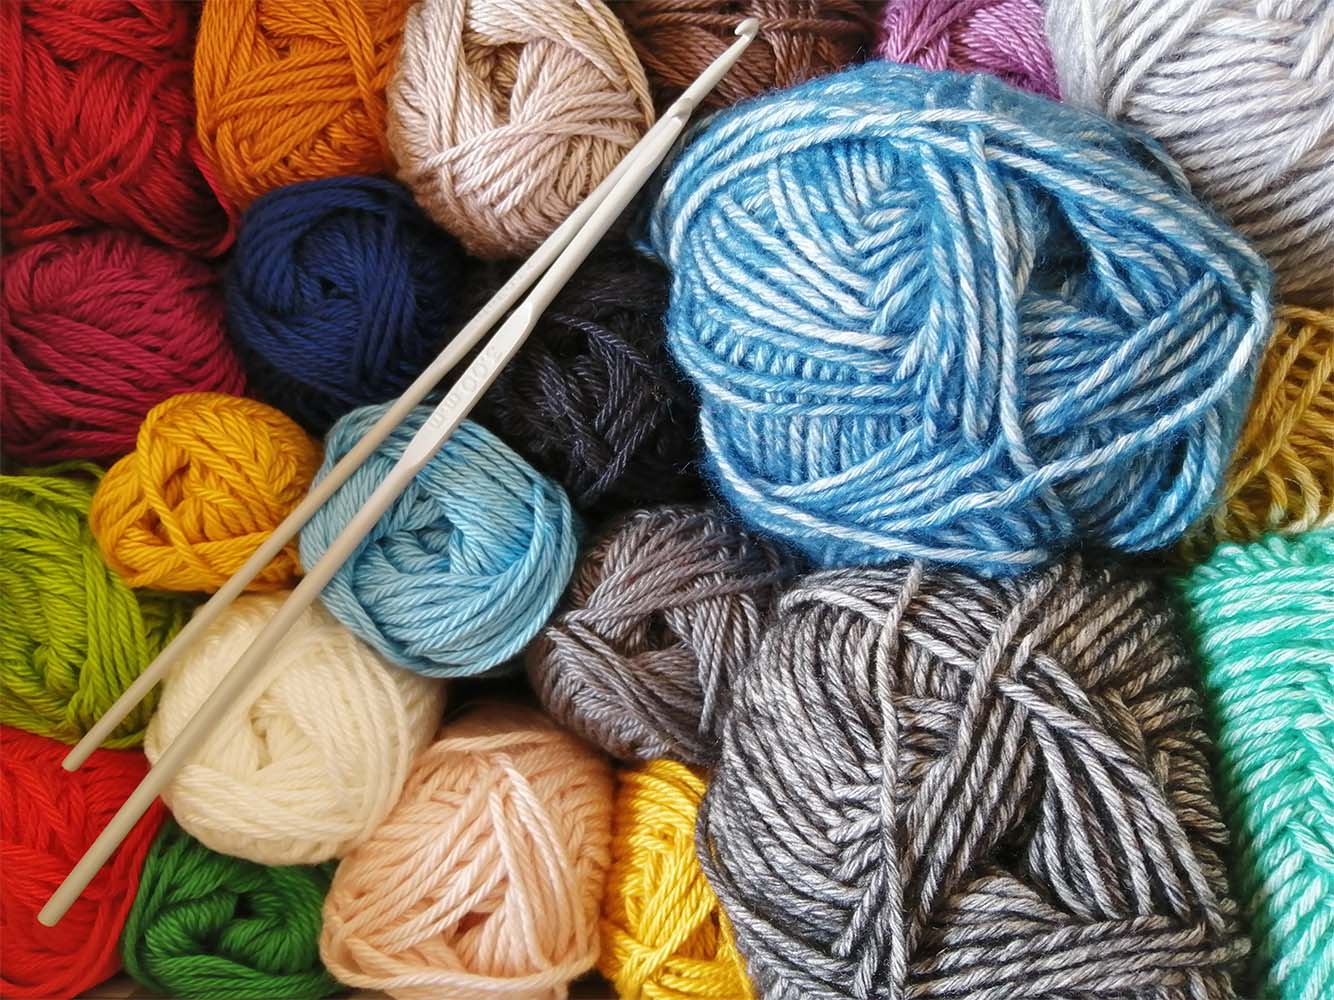 Balls of Wool & Knitting Needles